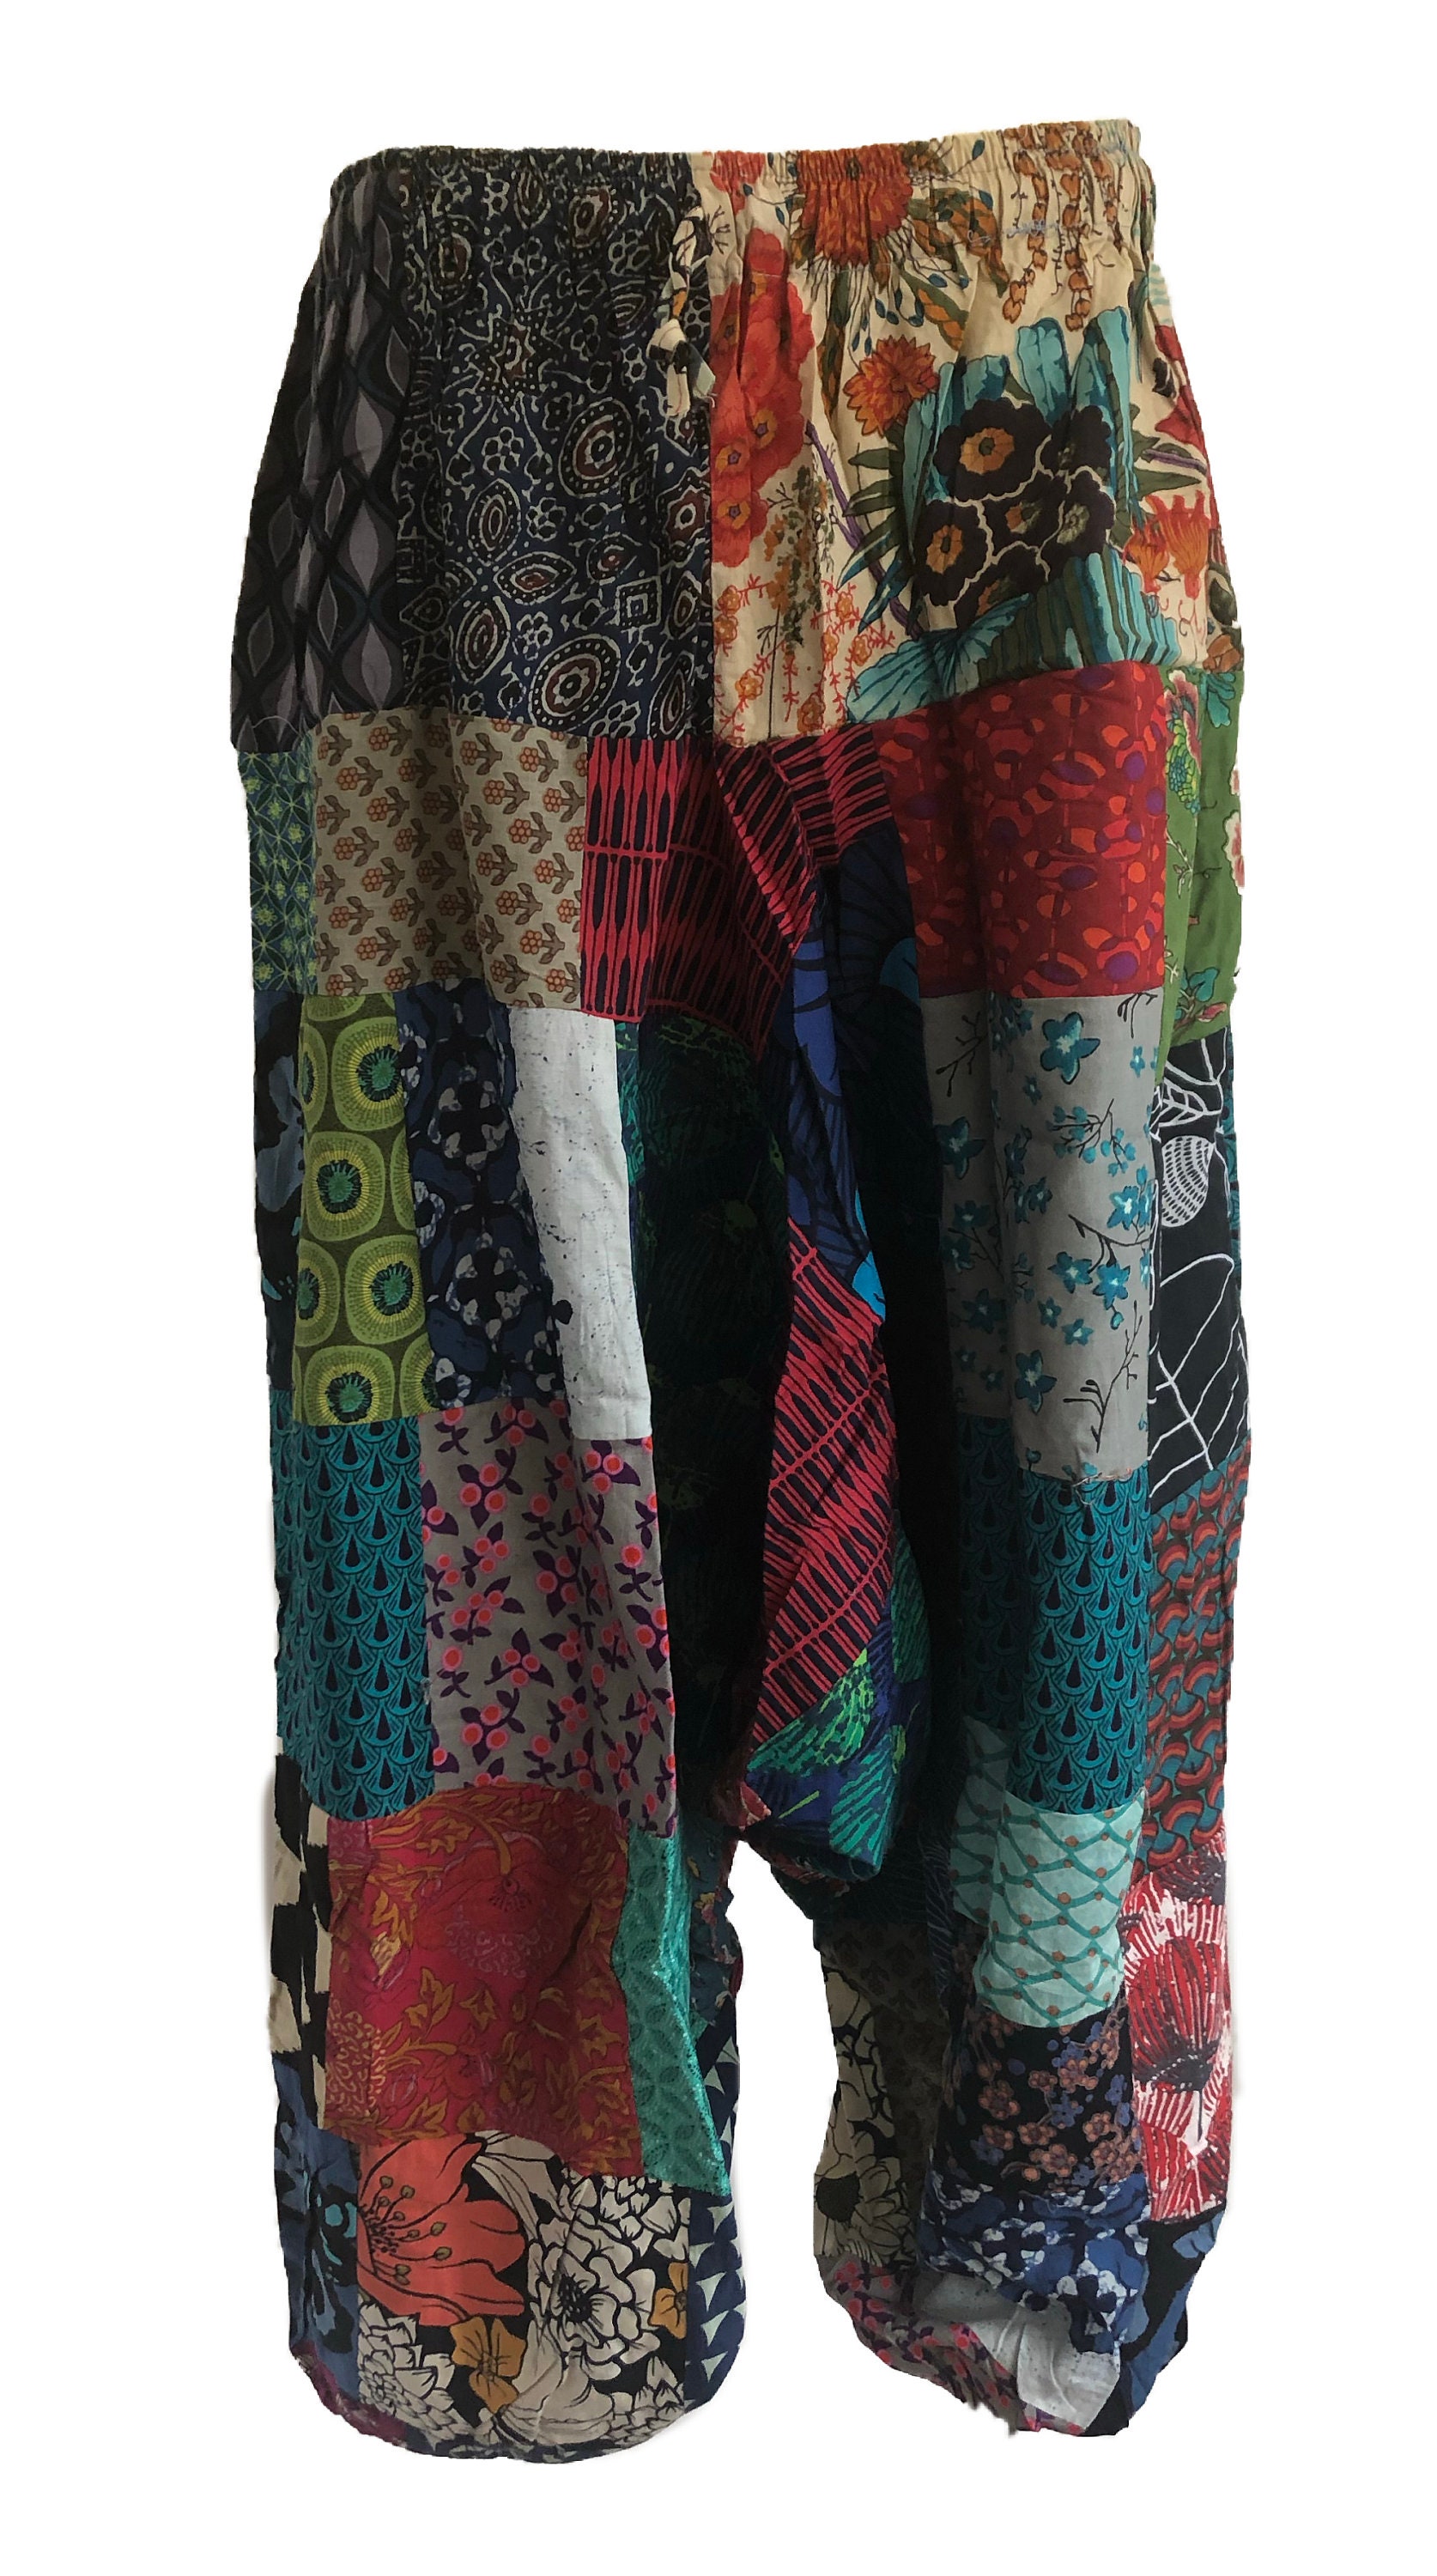 Colourful Patchwork Indian Cotton Trousers Boho Aladdin Yoga | Etsy